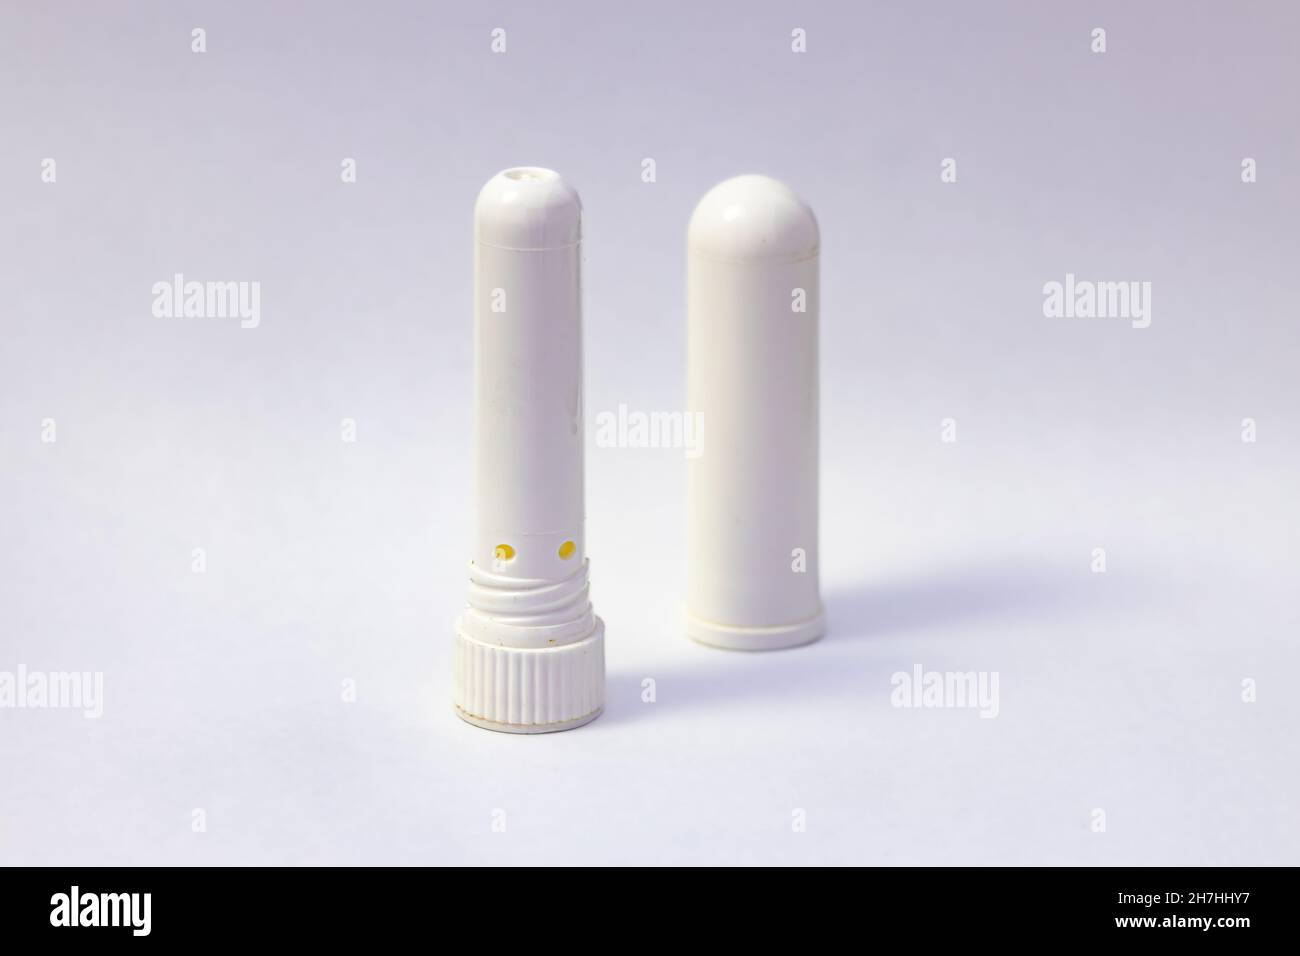 Decongestant White inhaler with essential oil vapors Stock Photo